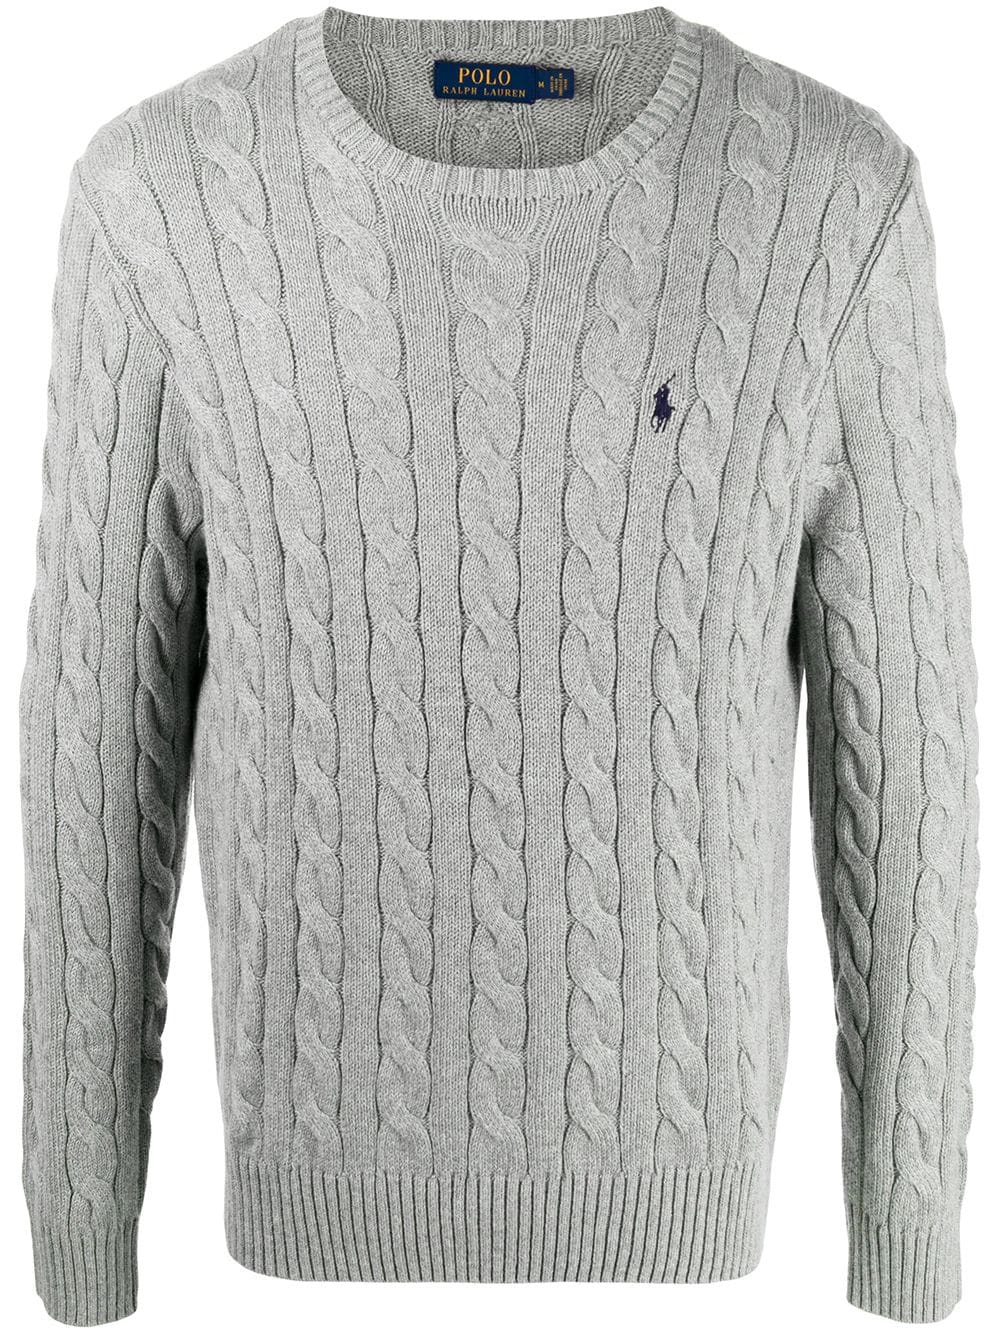 Polo Ralph Lauren cable knit knitted sweatshirt - Grey von Polo Ralph Lauren